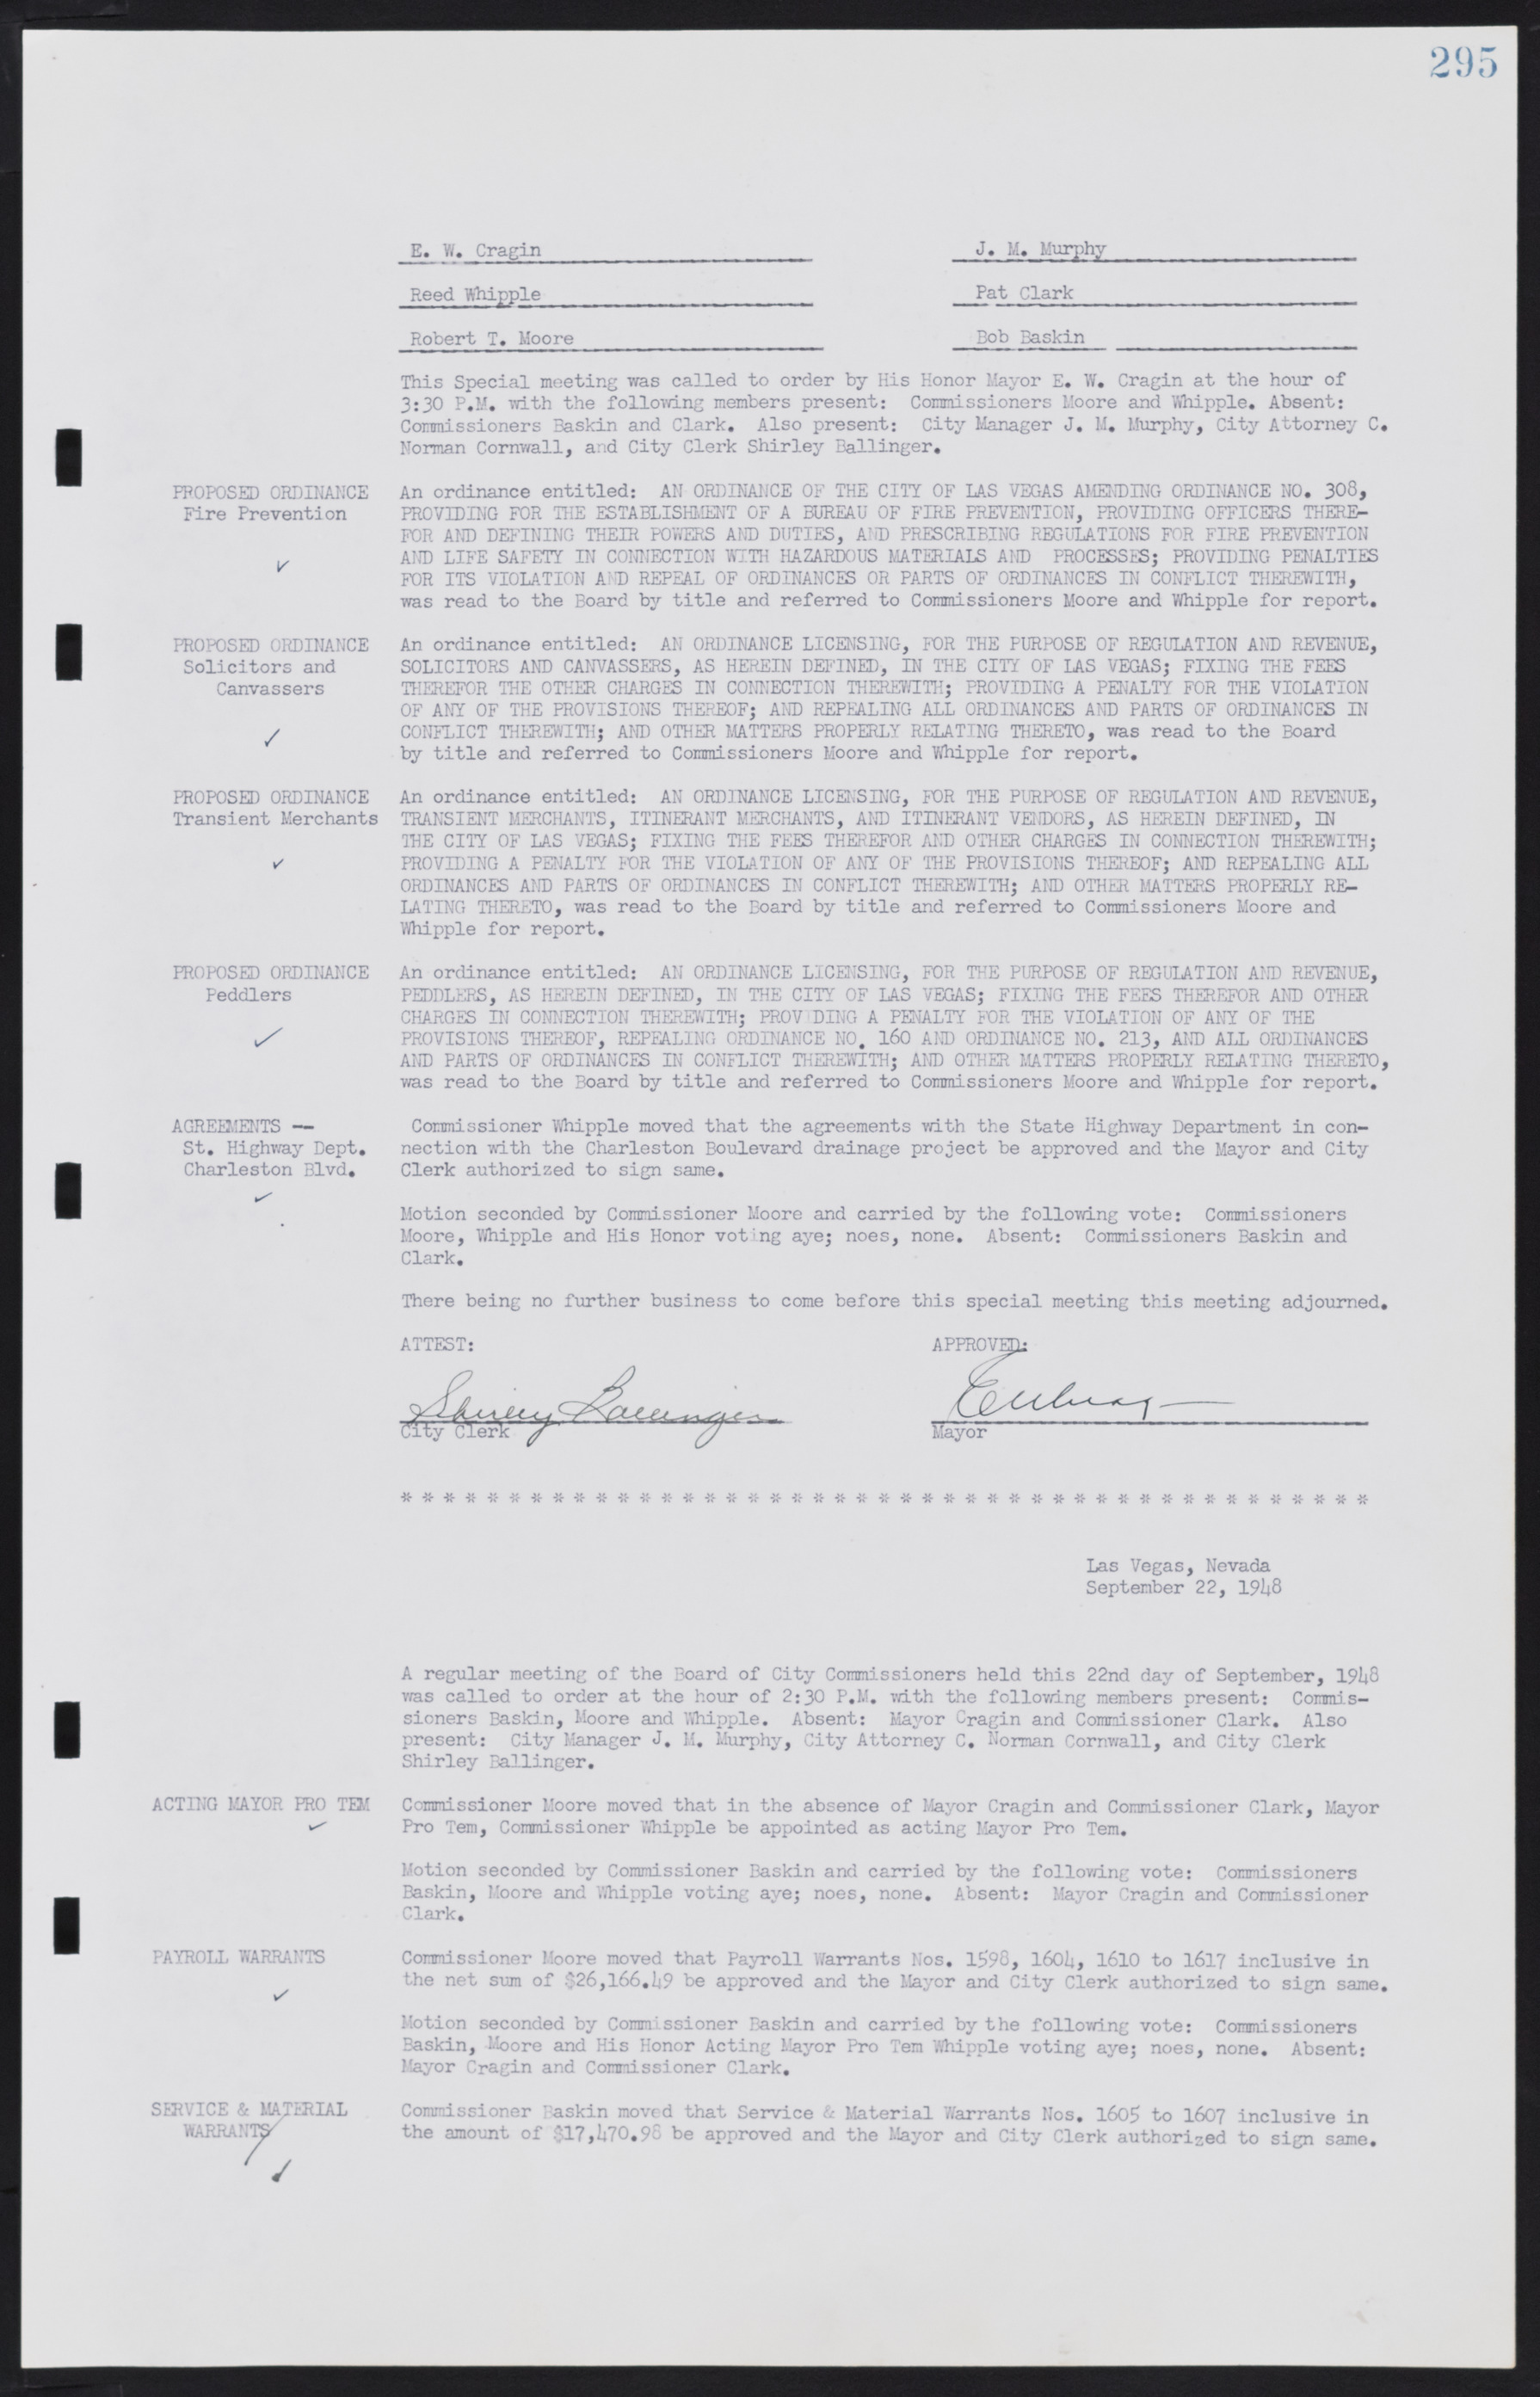 Las Vegas City Commission Minutes, January 7, 1947 to October 26, 1949, lvc000006-319